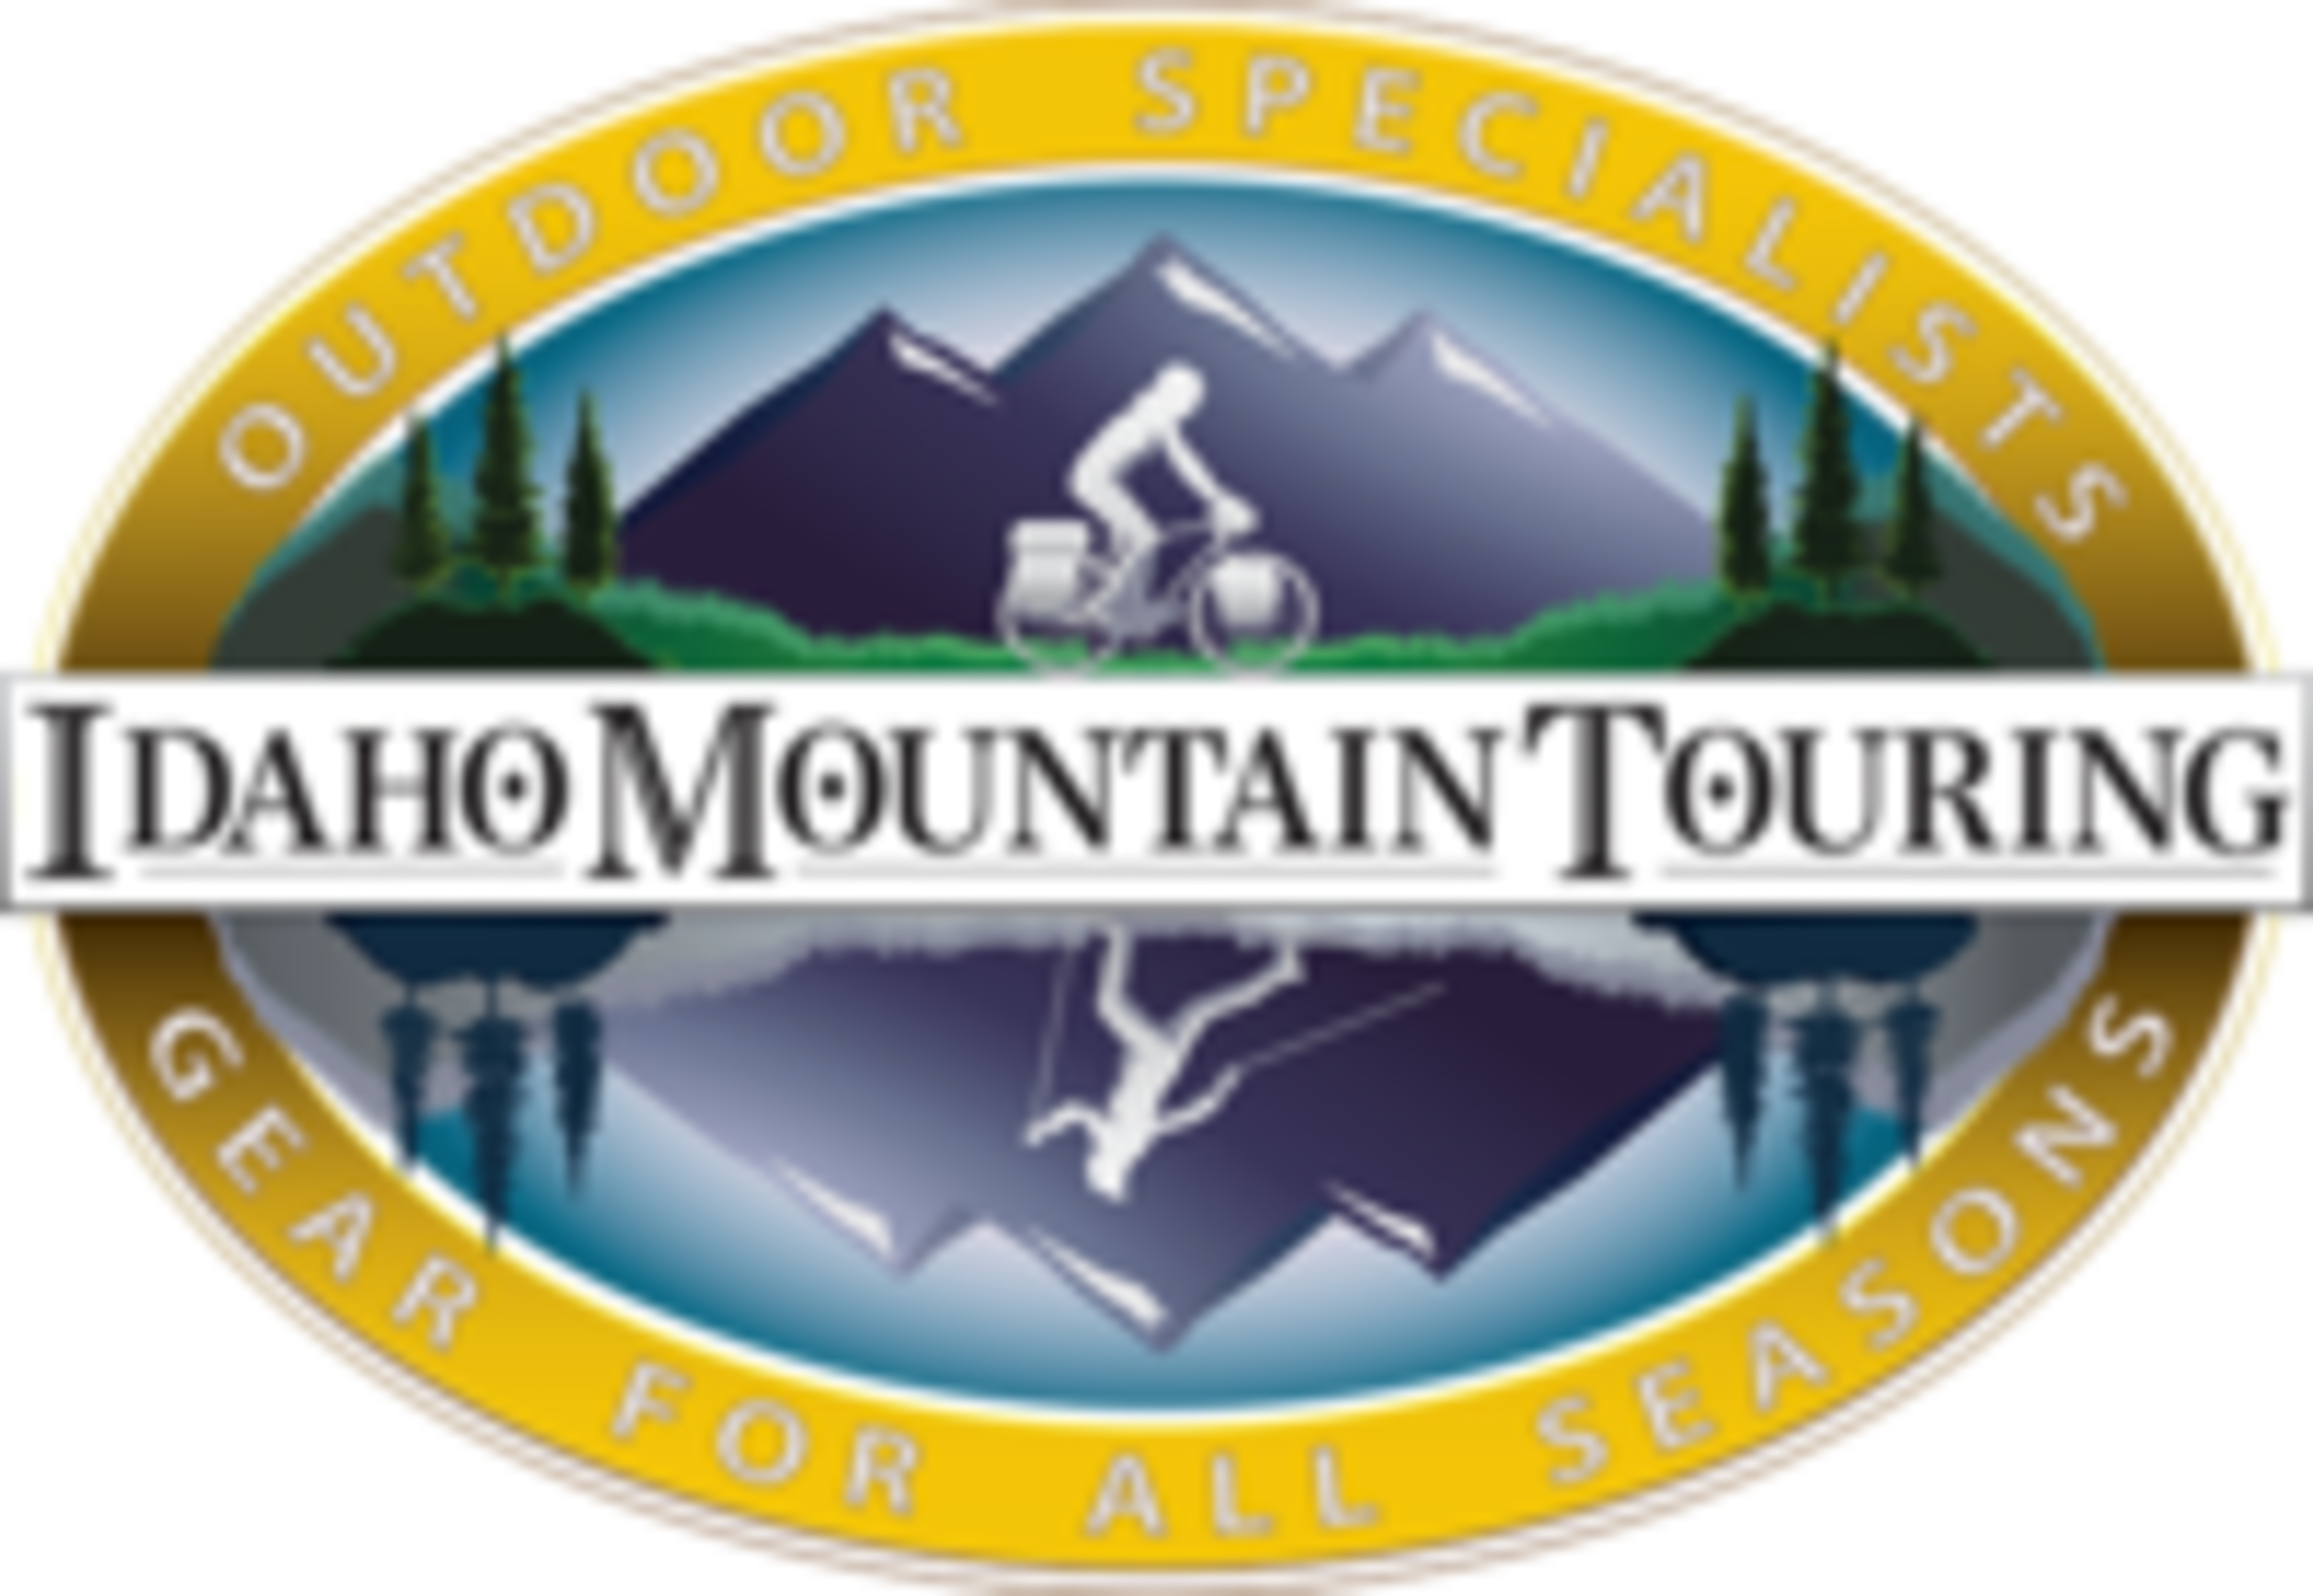 Idaho Mountain Touring Code